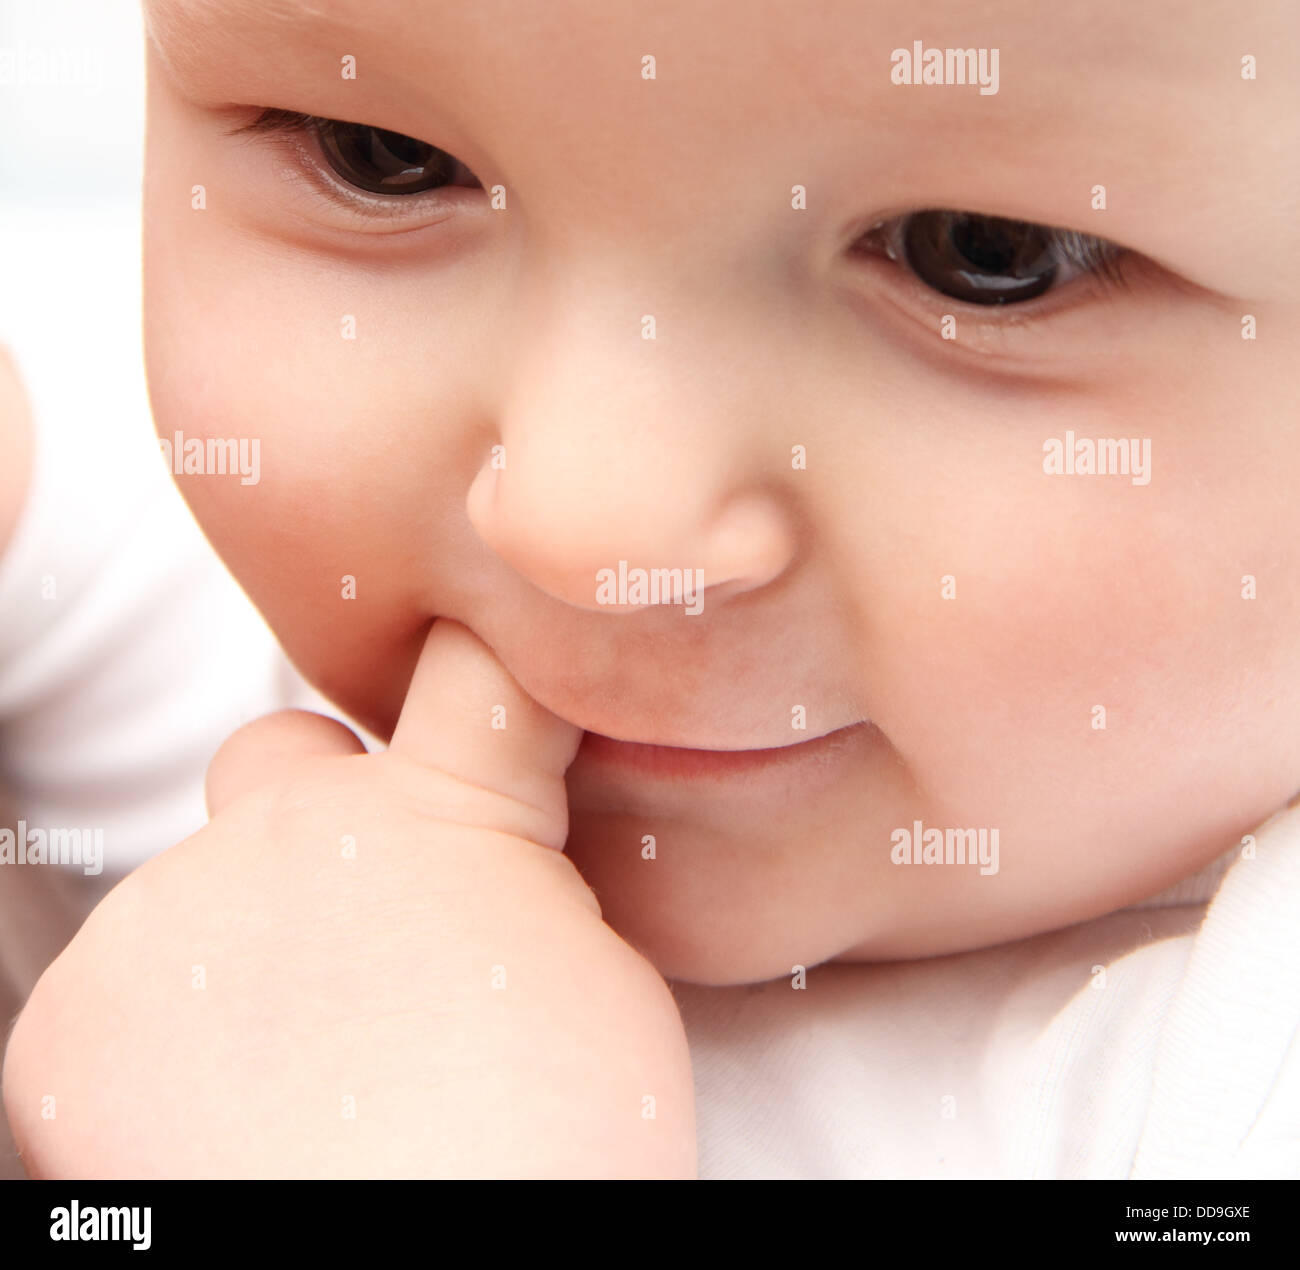 beautiful baby close up Stock Photo